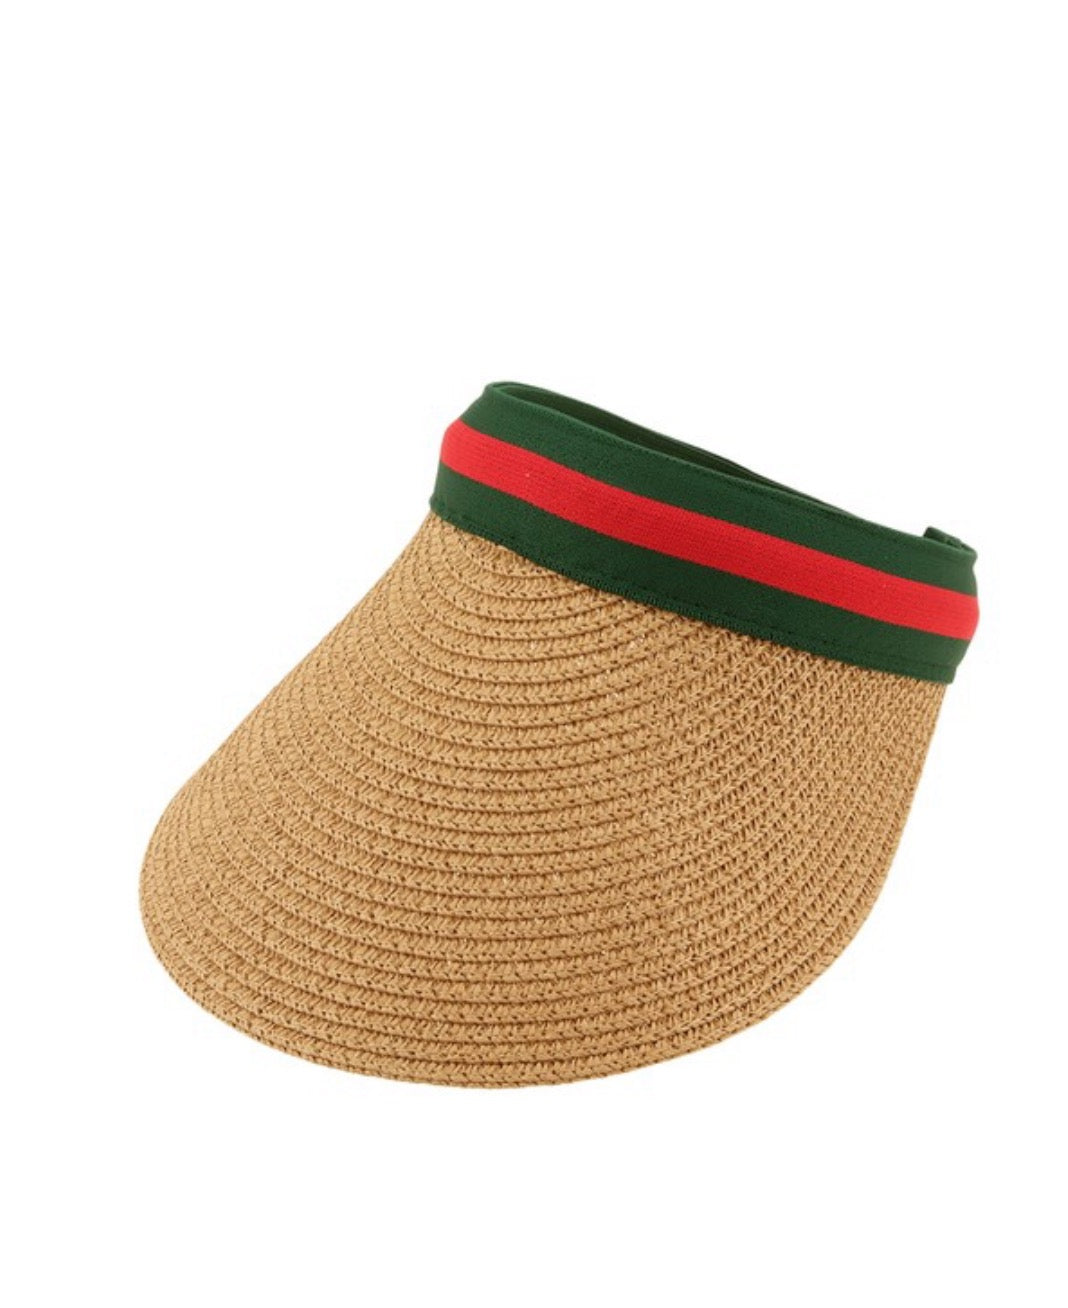 Khaki Straw Hat